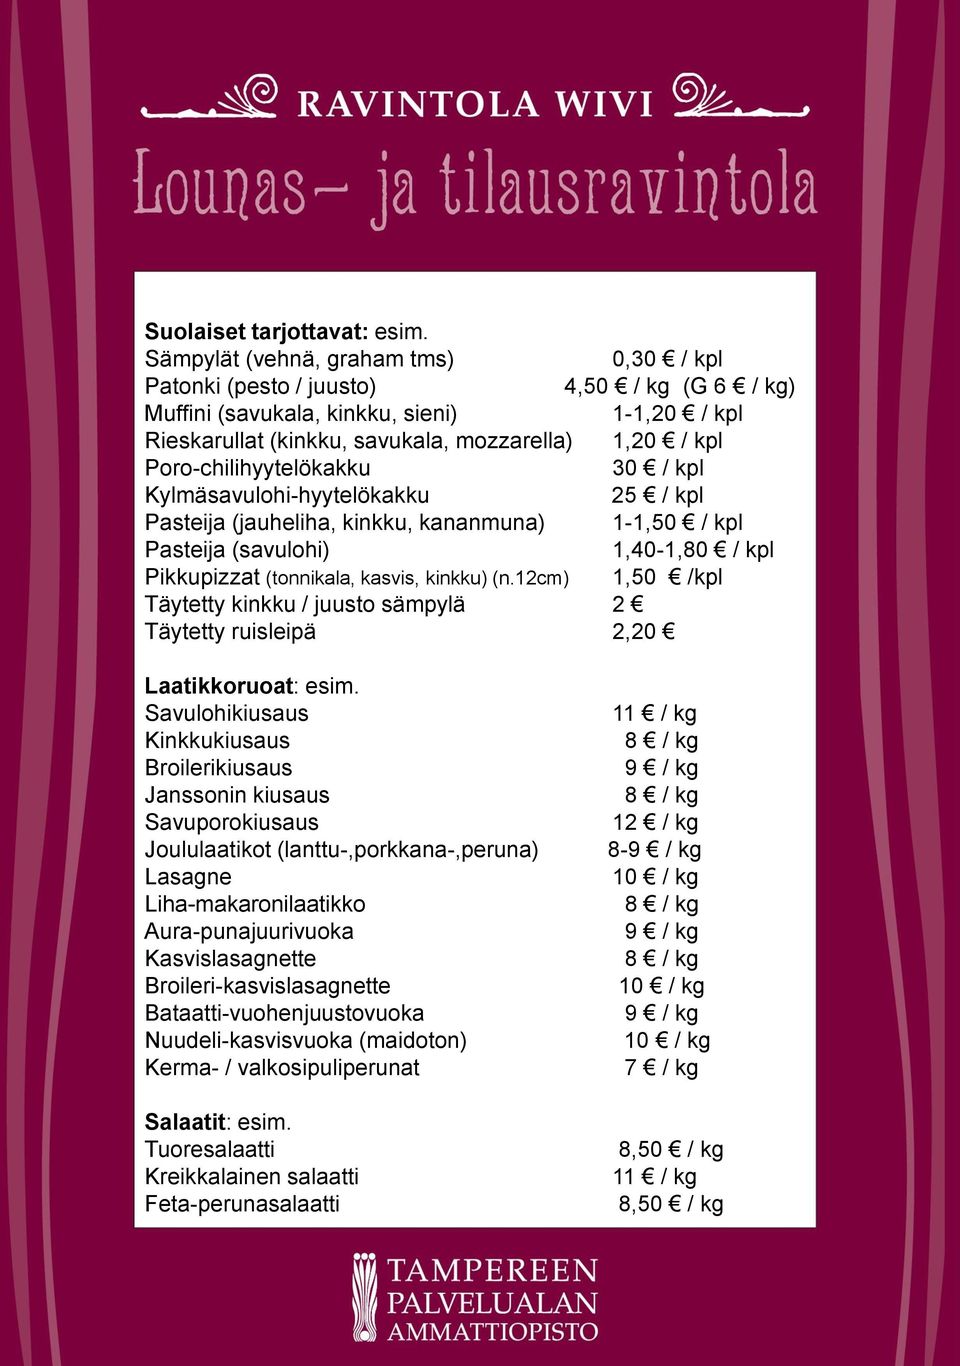 Poro-chilihyytelökakku 30 / kpl Kylmäsavulohi-hyytelökakku 25 / kpl Pasteija (jauheliha, kinkku, kananmuna) 1-1,50 / kpl Pasteija (savulohi) 1,40-1,80 / kpl Pikkupizzat (tonnikala, kasvis, kinkku) (n.